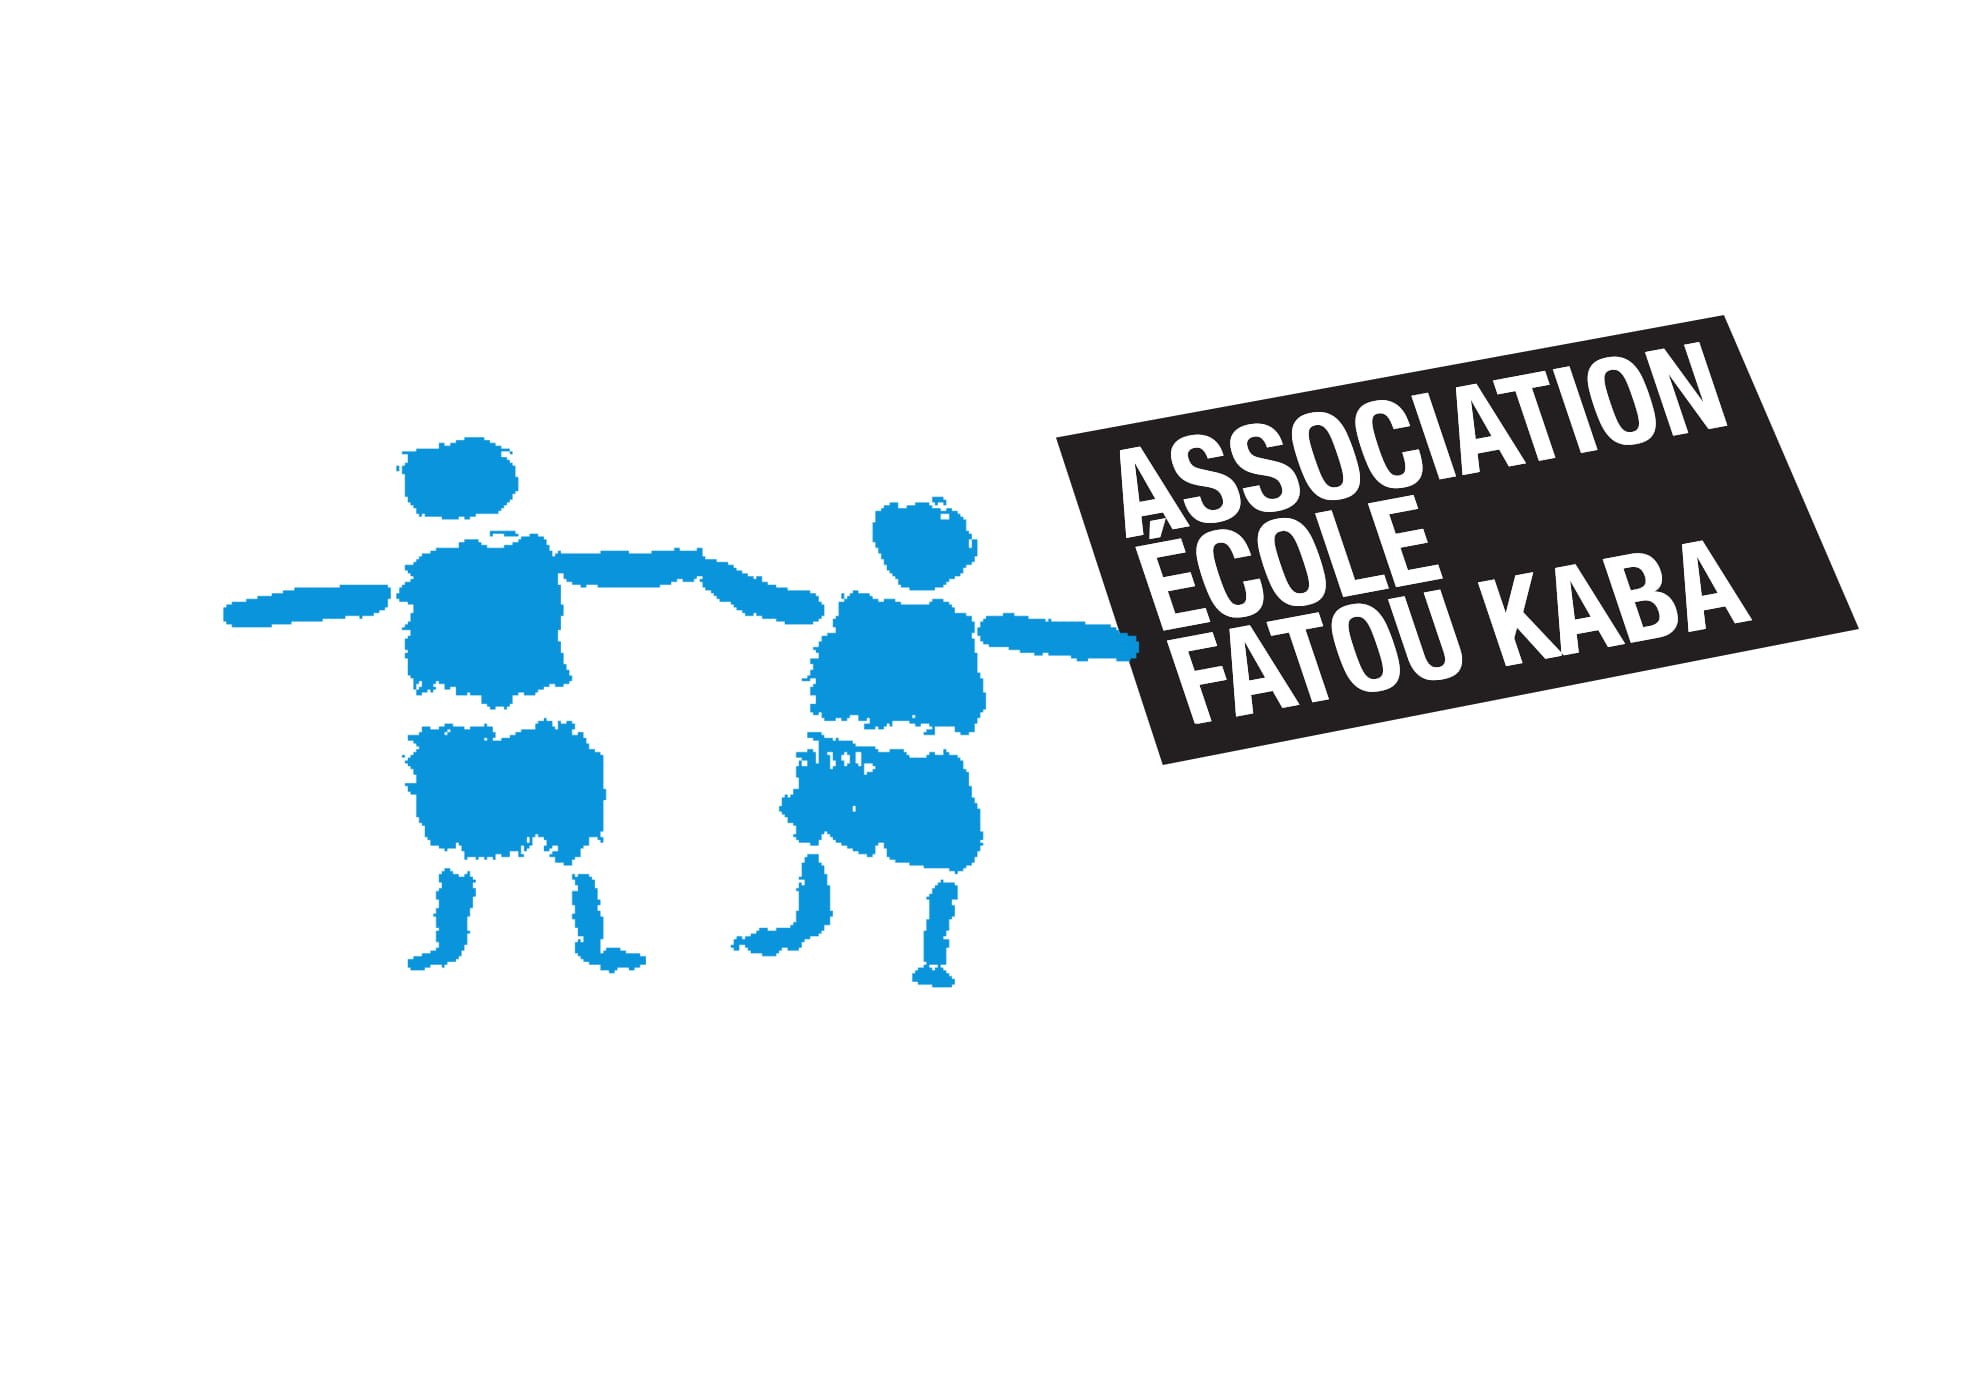 Association Ecole Fatou Kaba – 94 rue Haxo, 75020 Paris.                                                                                                                                           association@fatoukaba.org – Tél : 06 60 58 20 32 / 06 20 60 51 01